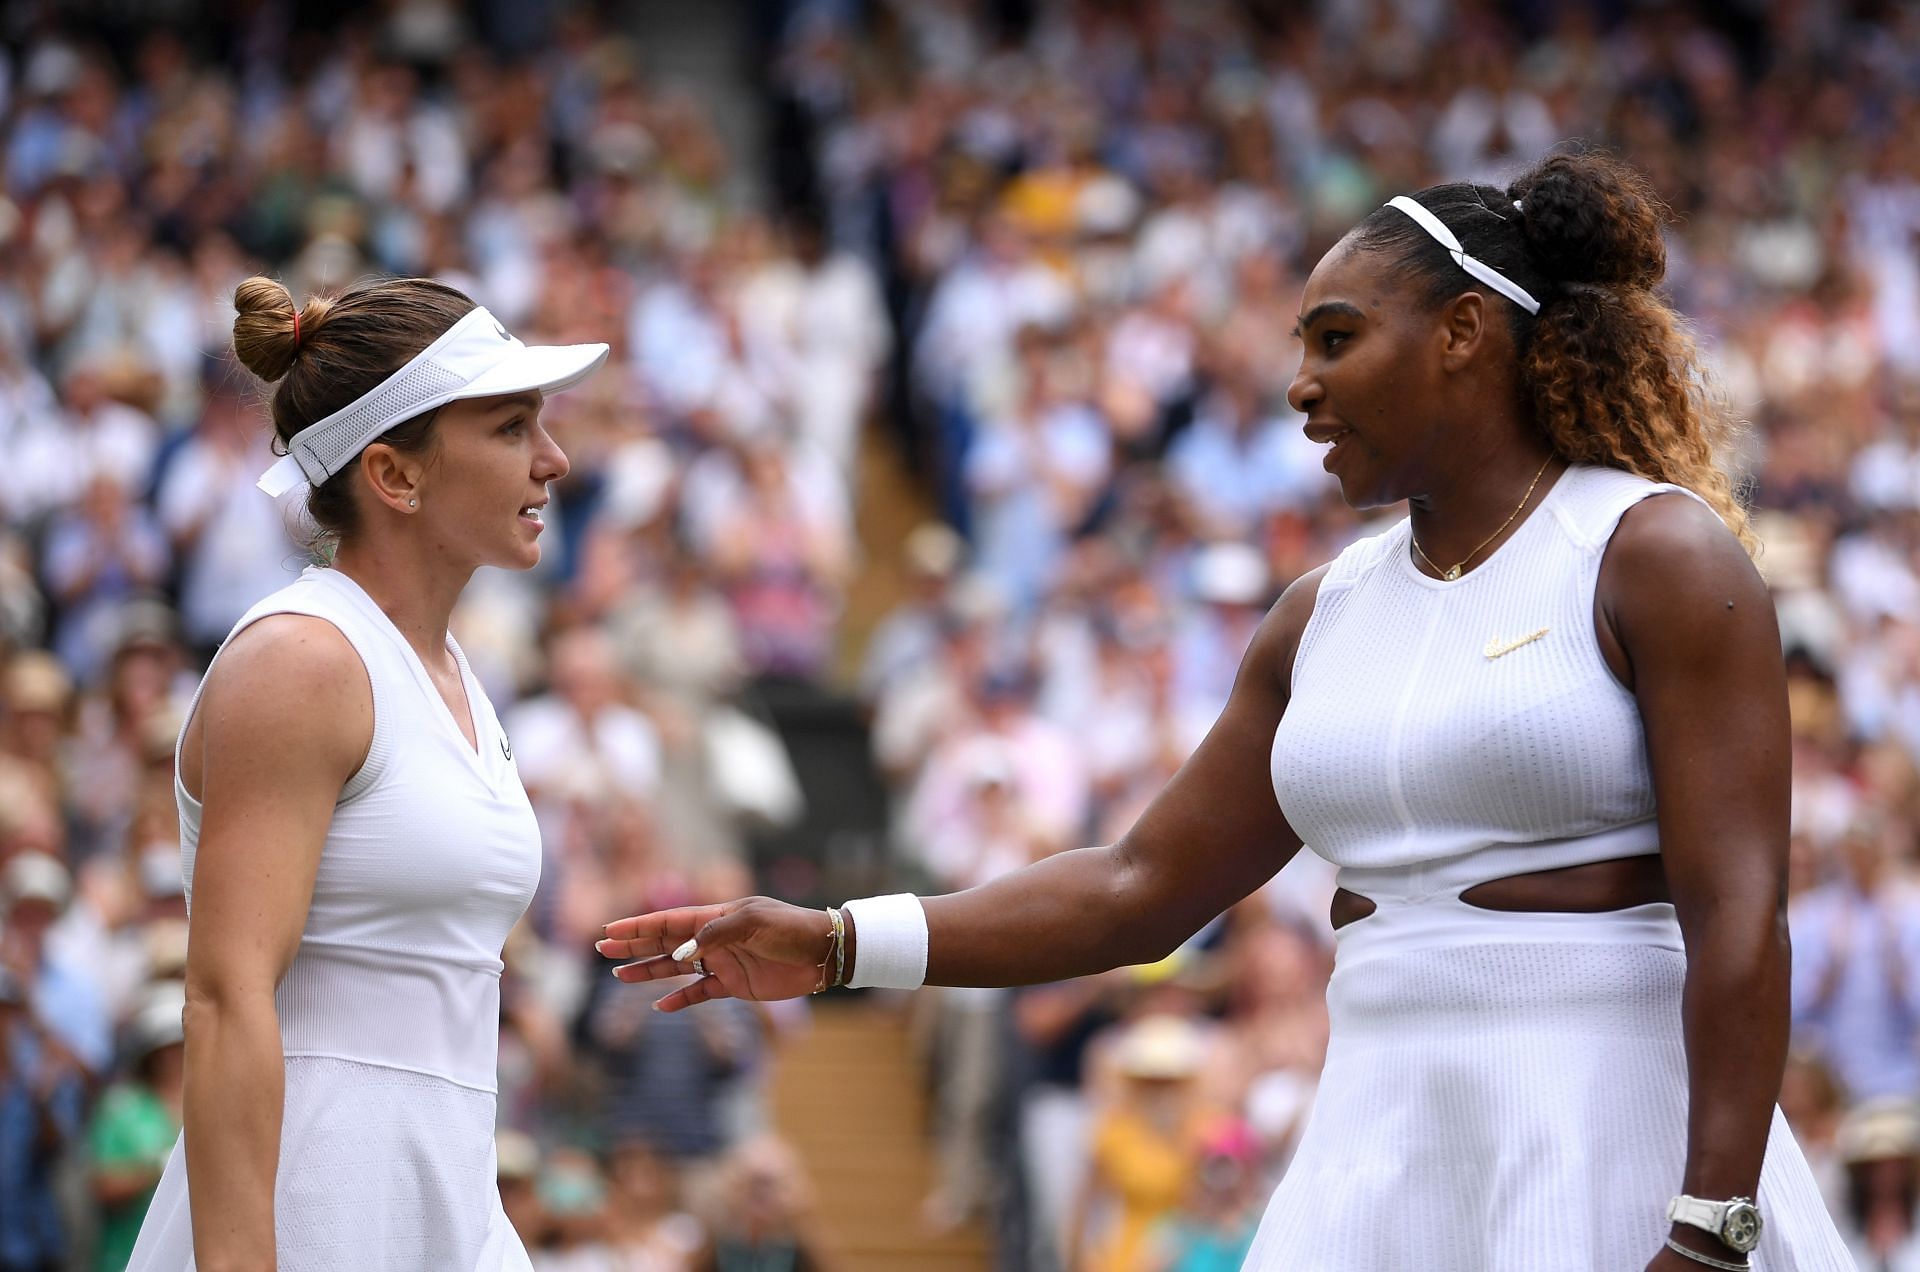 Simona Halep and Serena Williams at the 2019 Wimbledon.